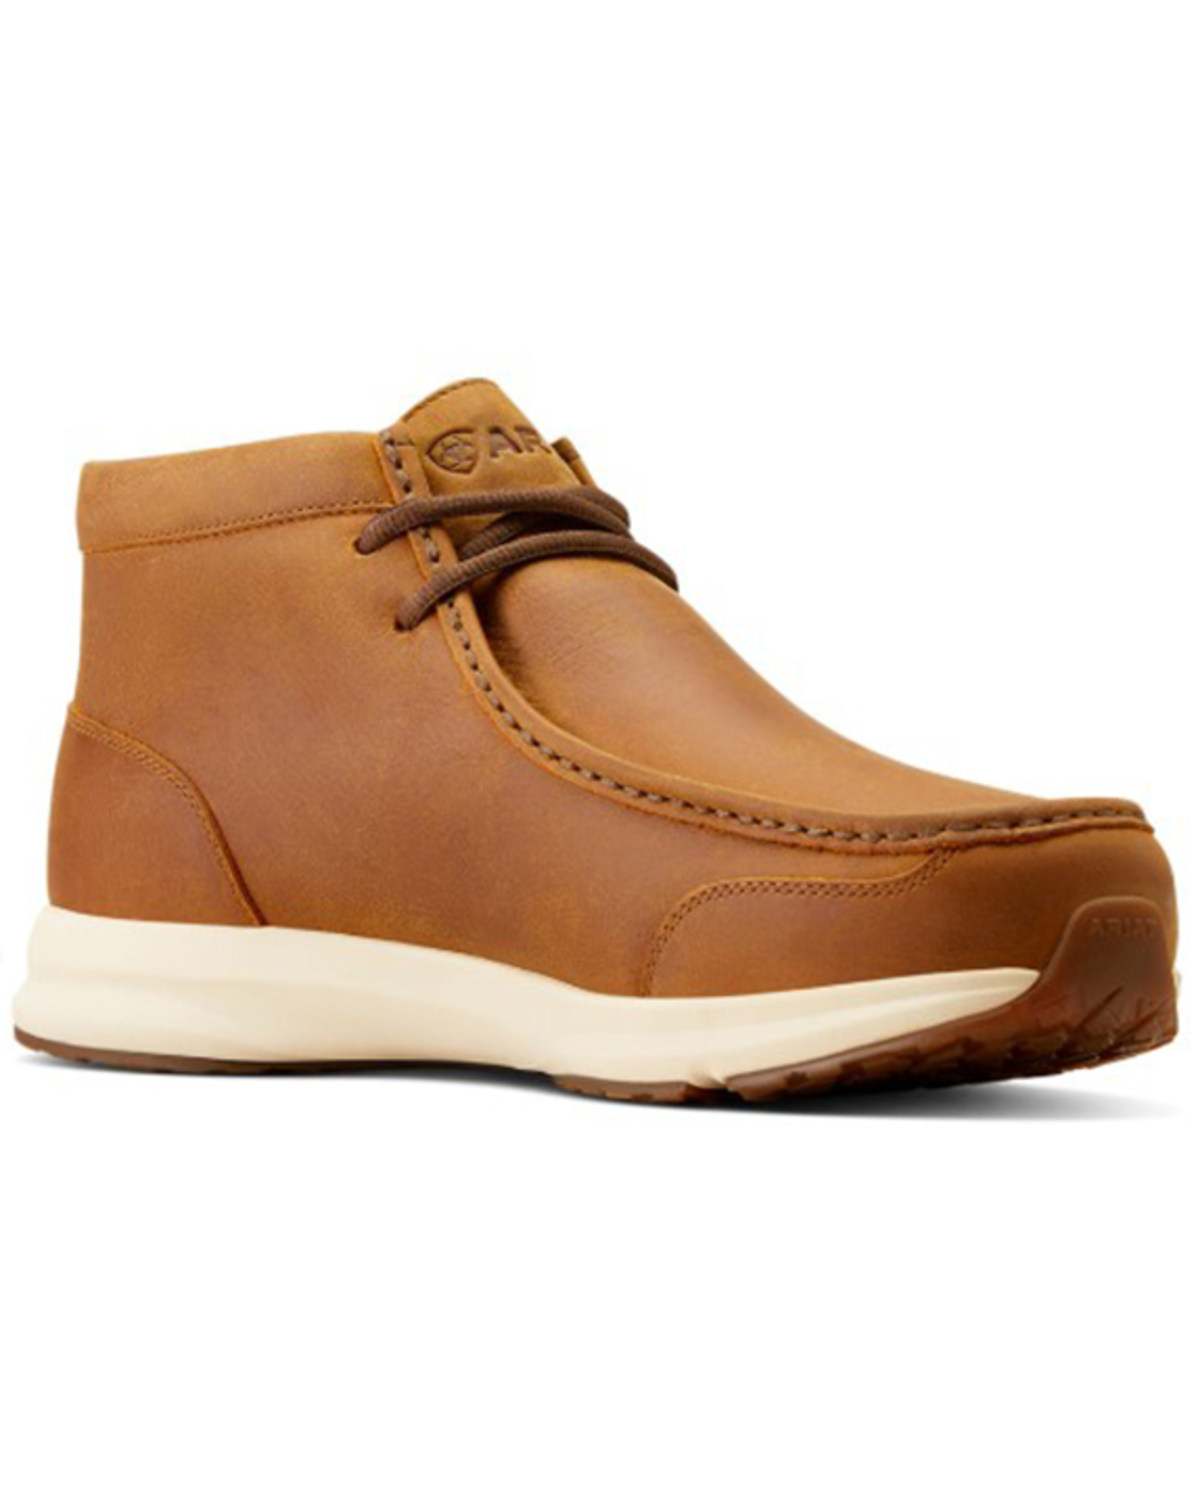 Ariat Men's Spitfire Waterproof Casual Shoes - Moc Toe